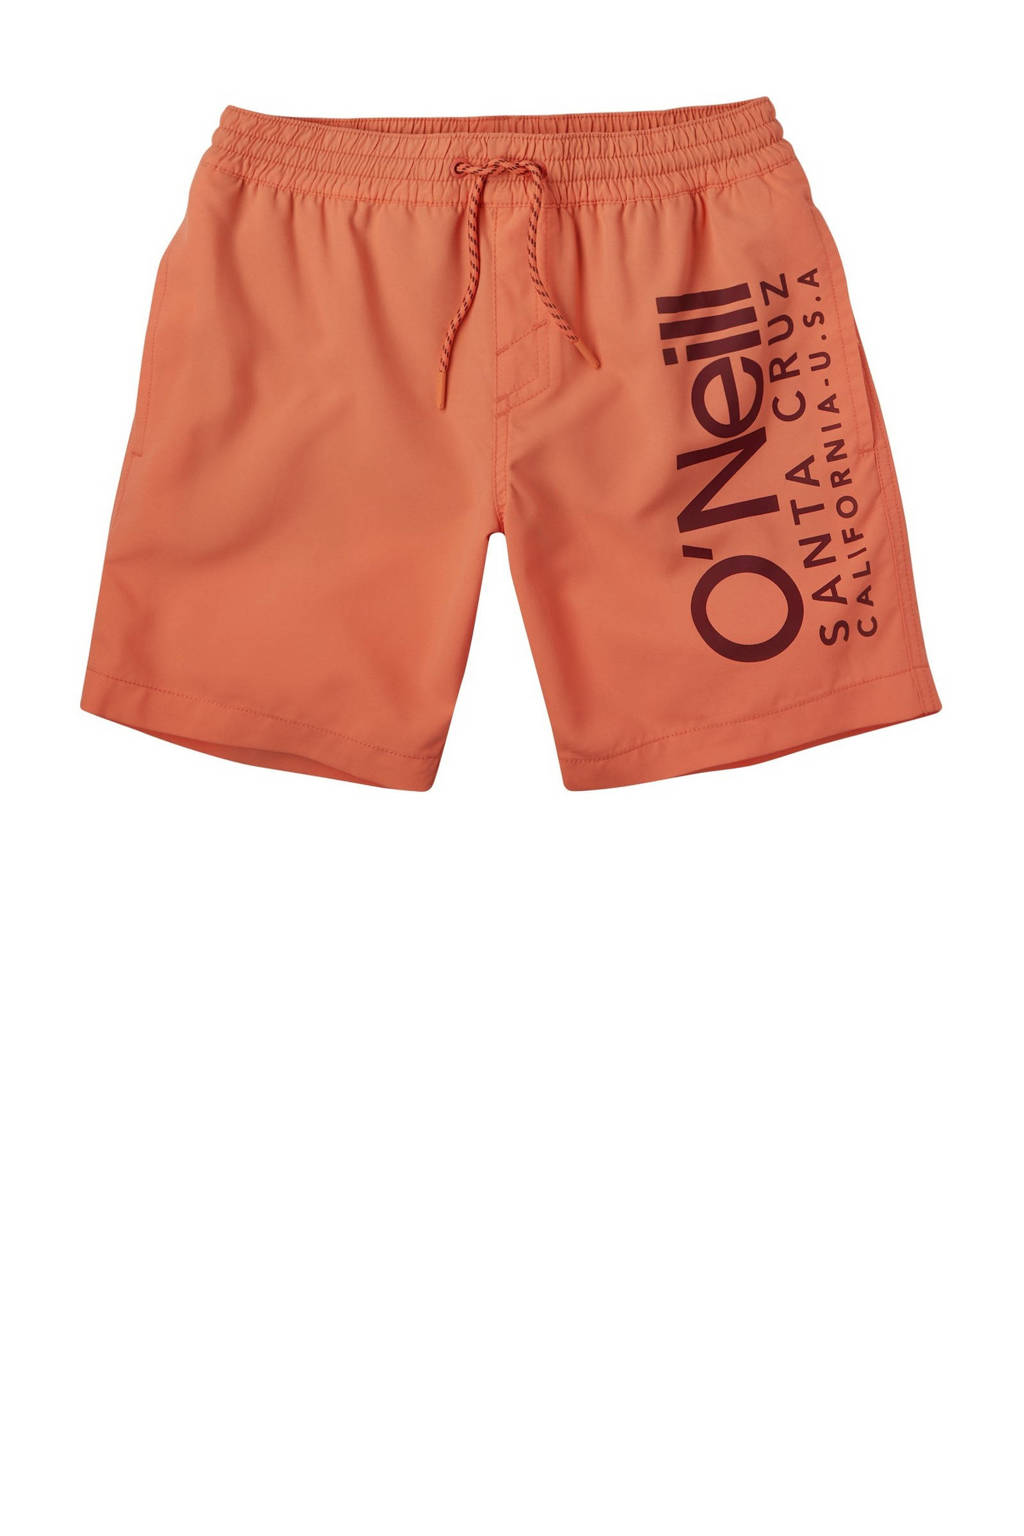 O'Neill Blue zwemshort Cali met logo oranje, Oranje